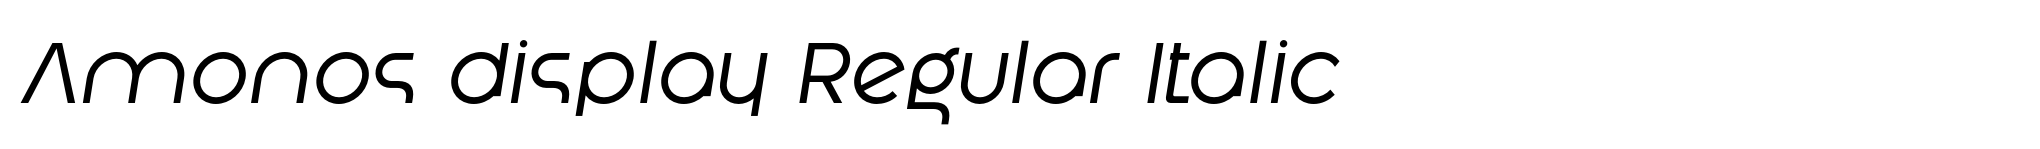 Amonos display Regular Italic image